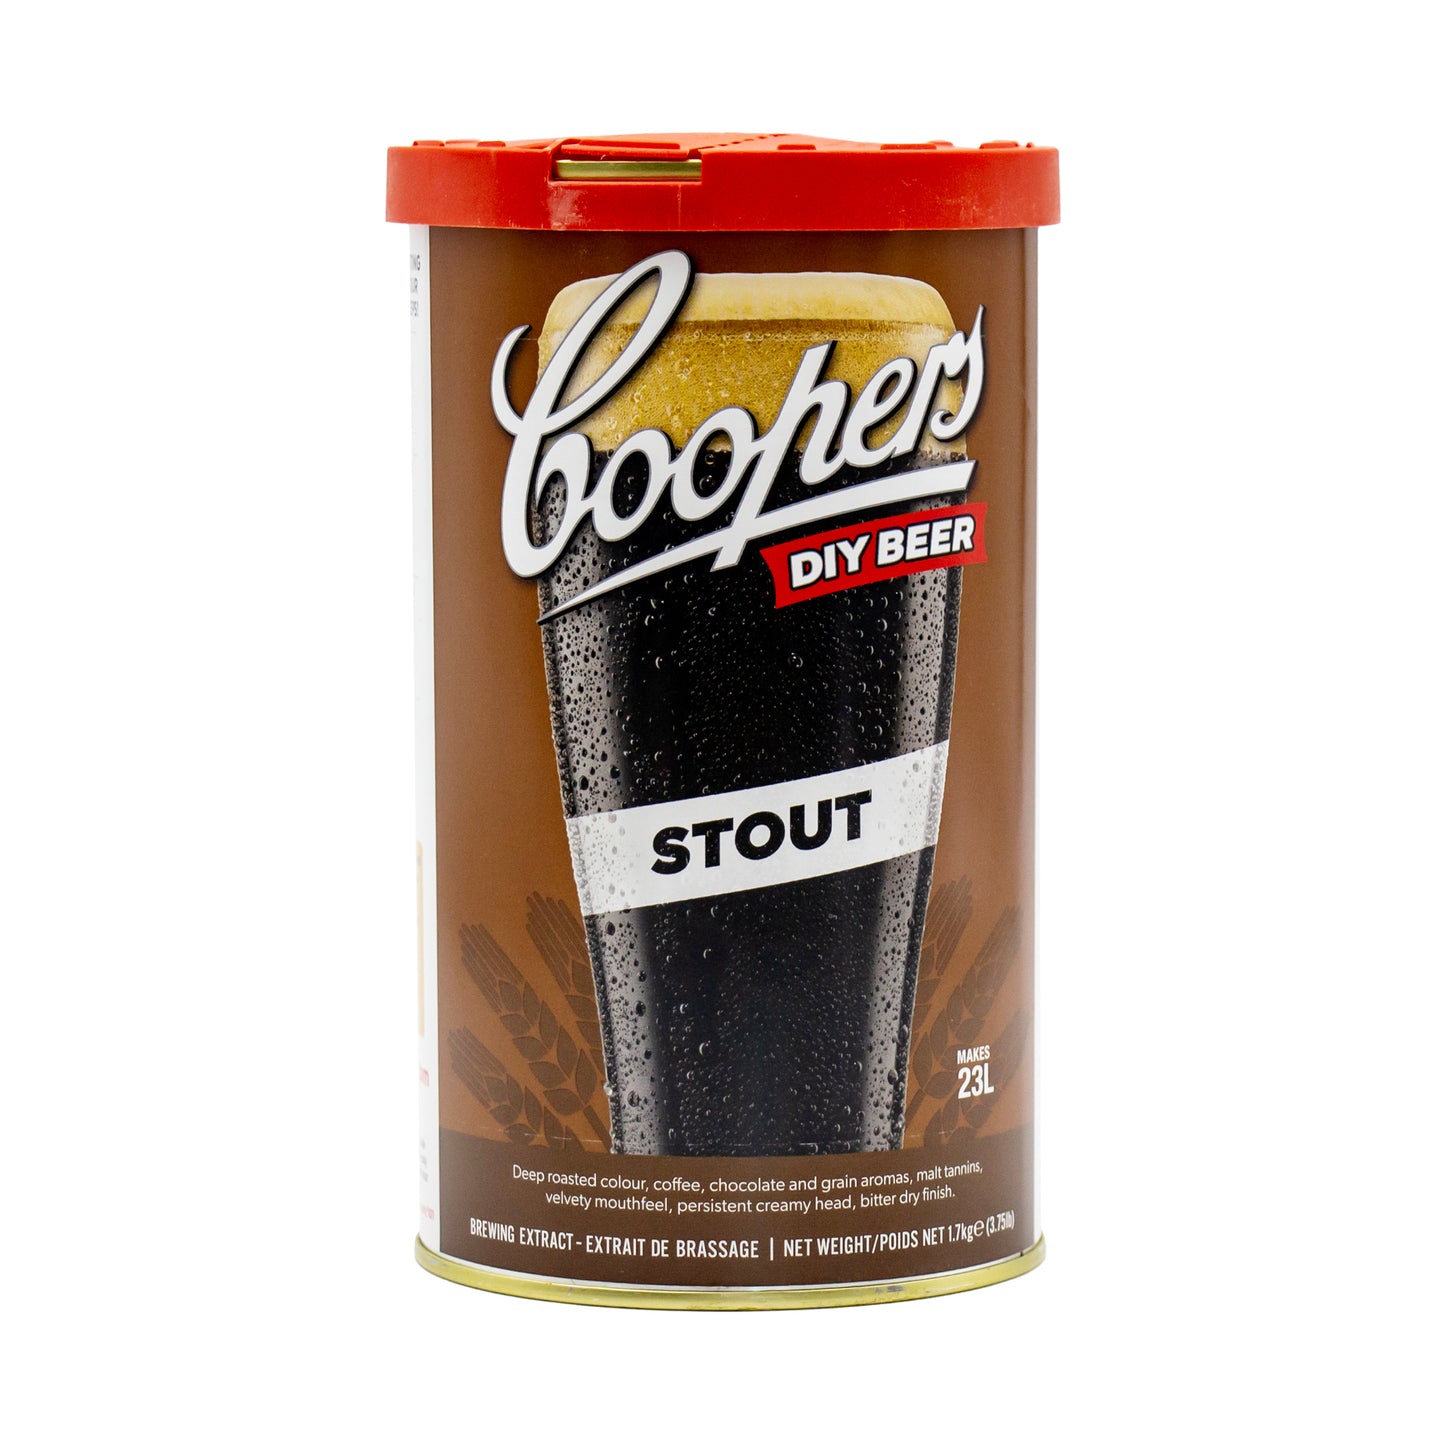 coopers original series stout beer tin